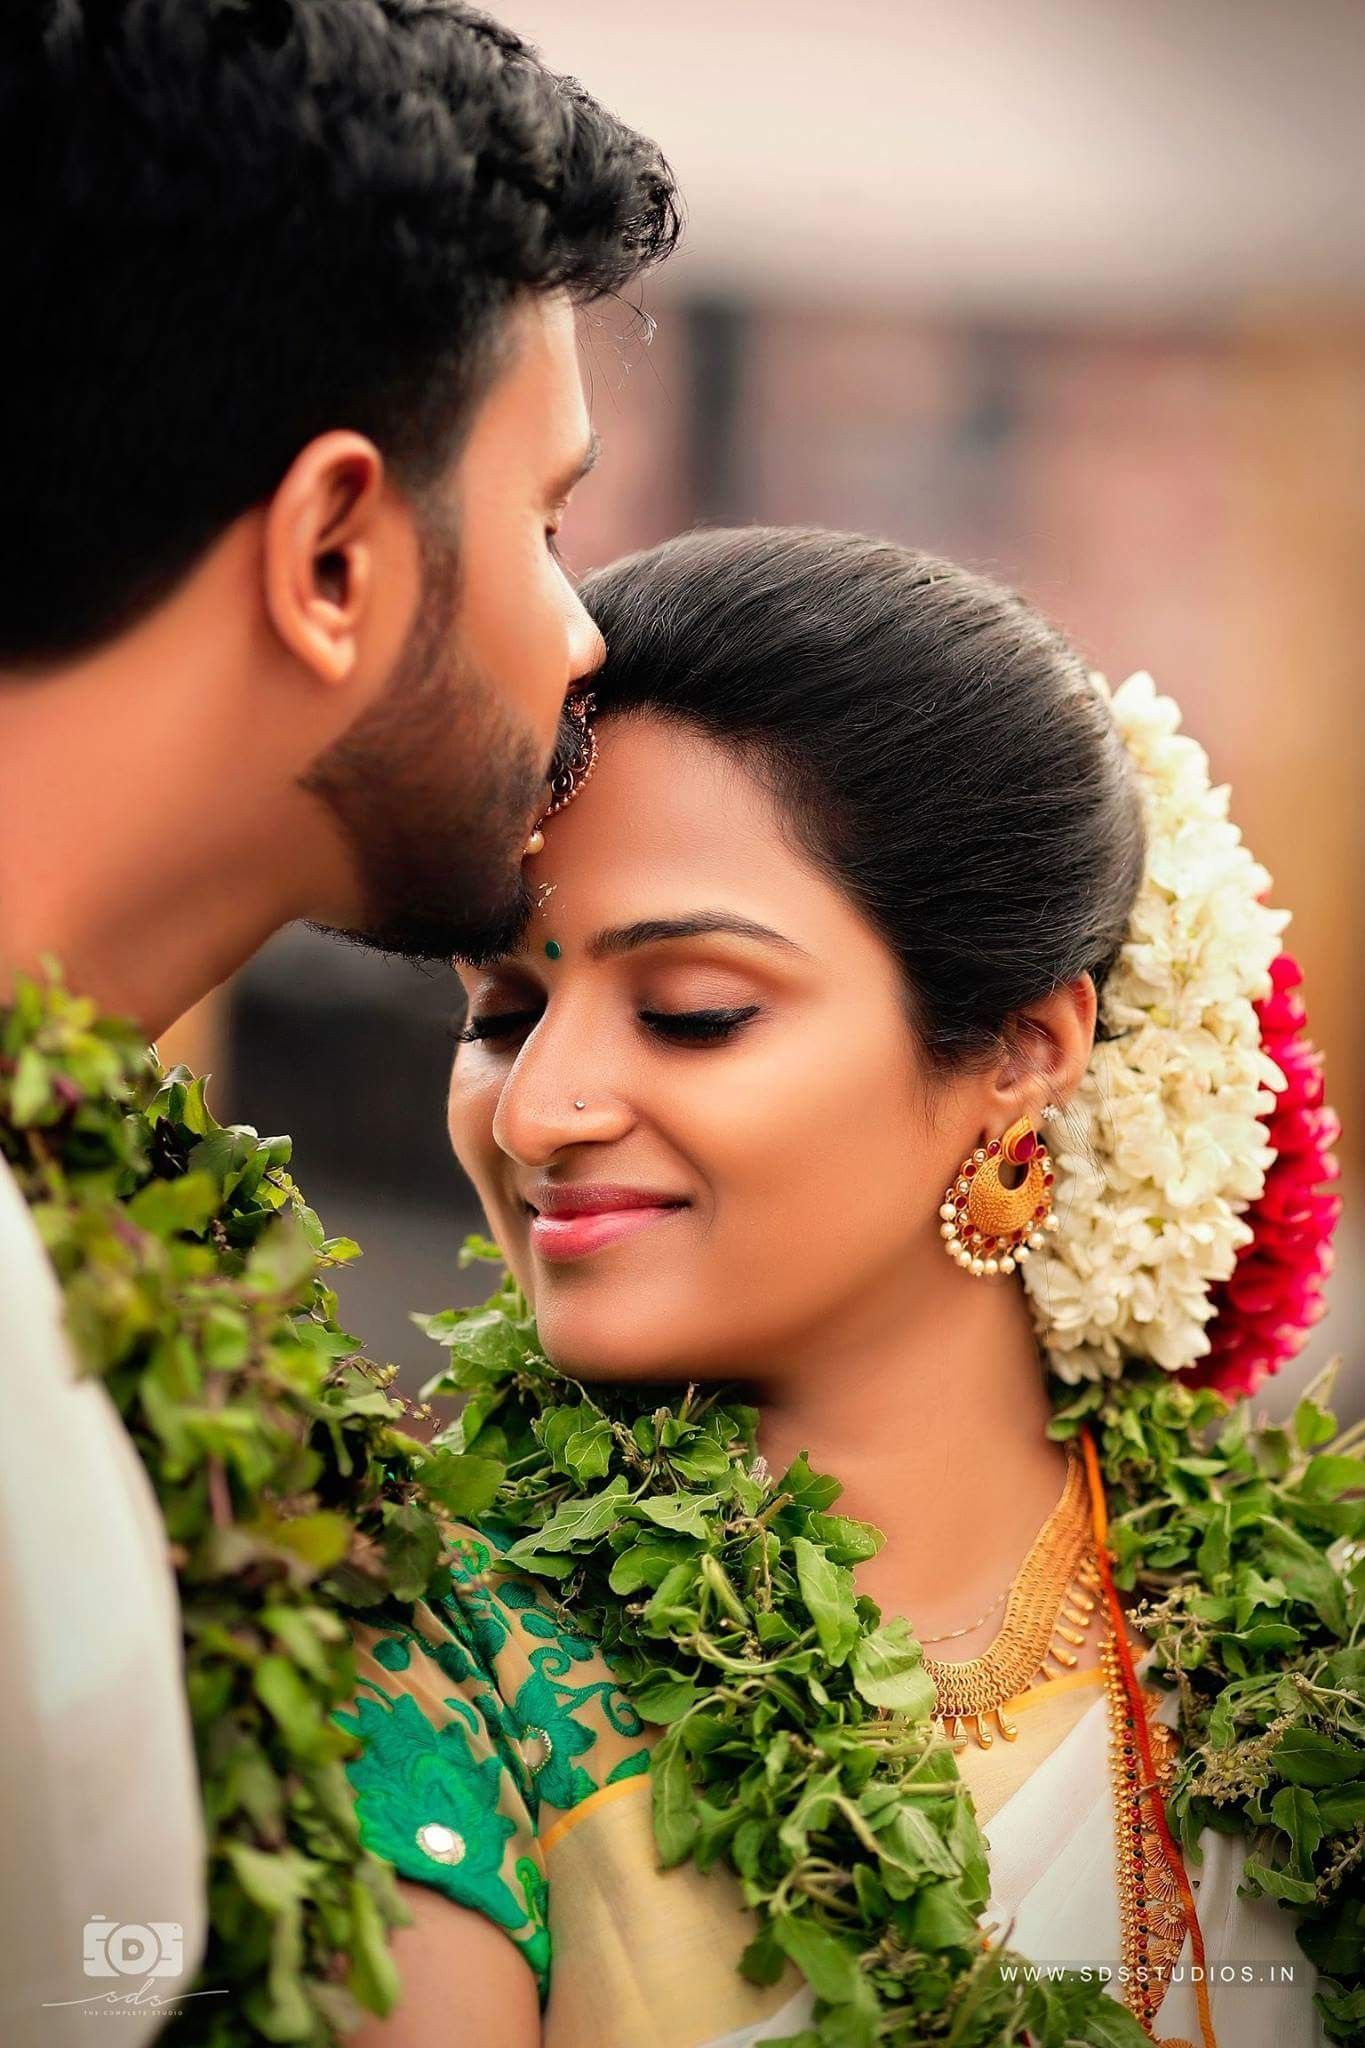 Awesome kerala wedding photography poses ideas for bride & groom | kerala  wedding photoshoot |siri m - YouTube